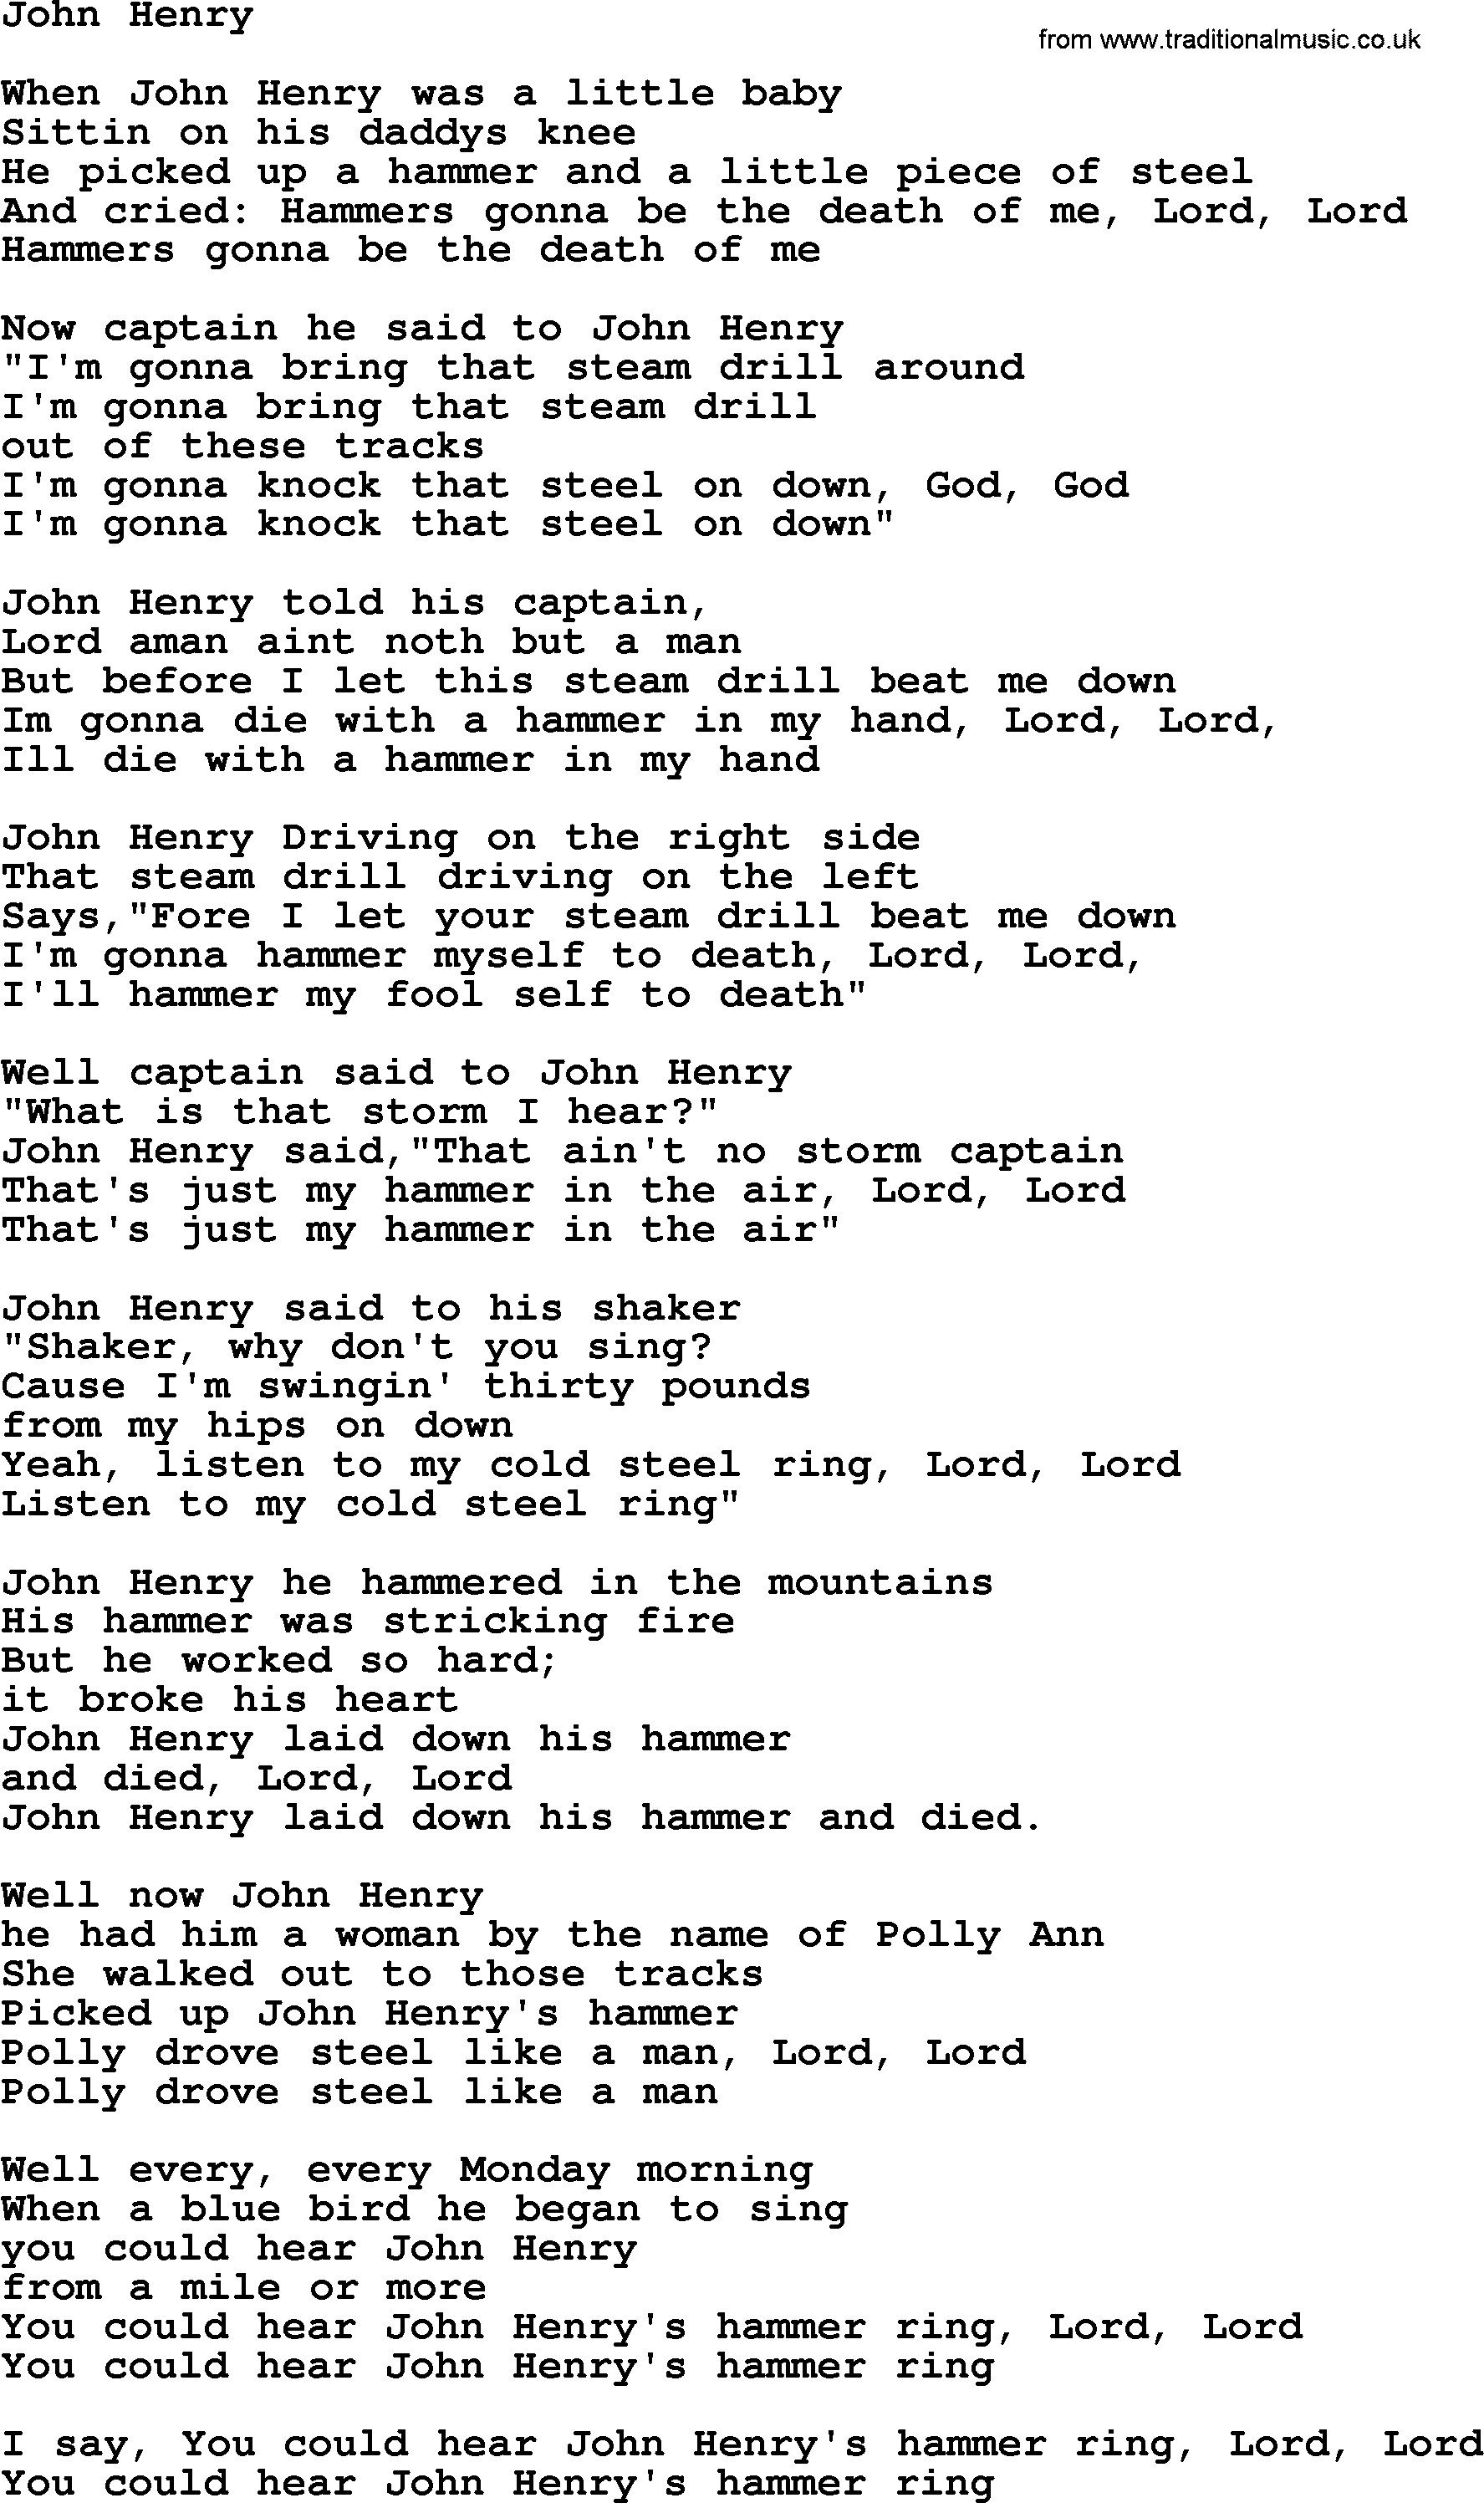 Bruce Springsteen song: John Henry lyrics